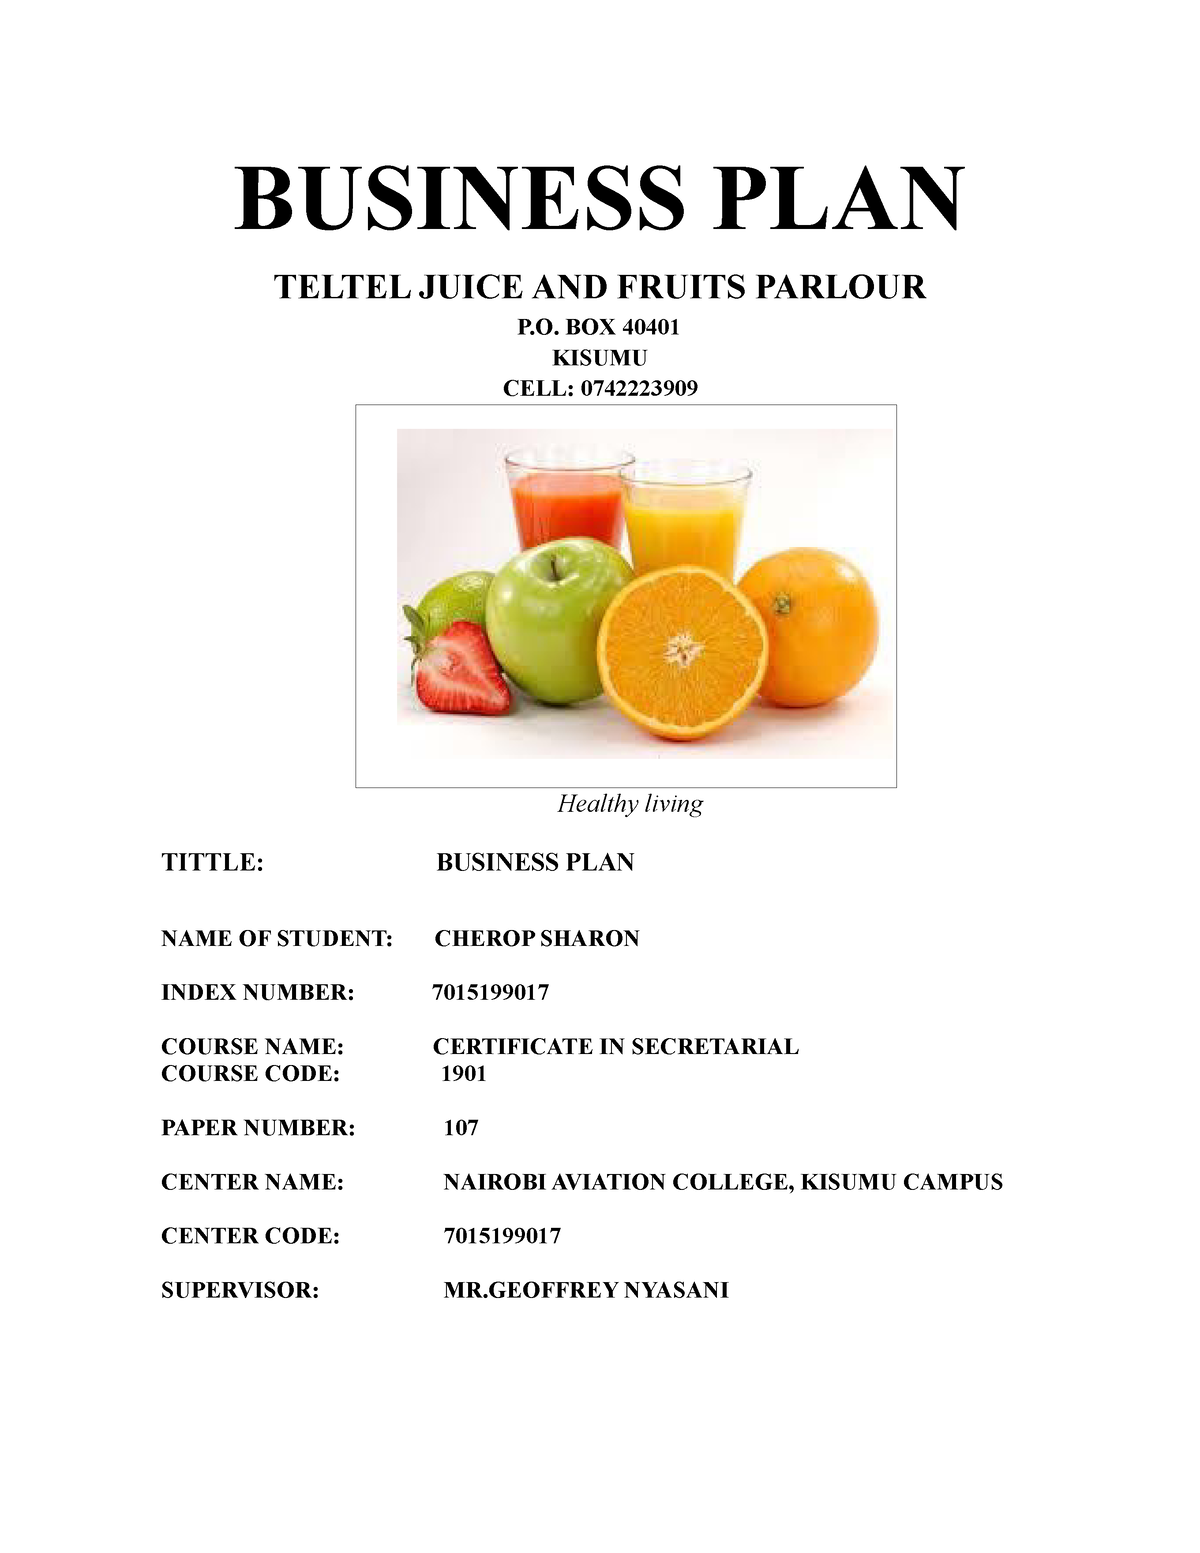 boost juice business plan